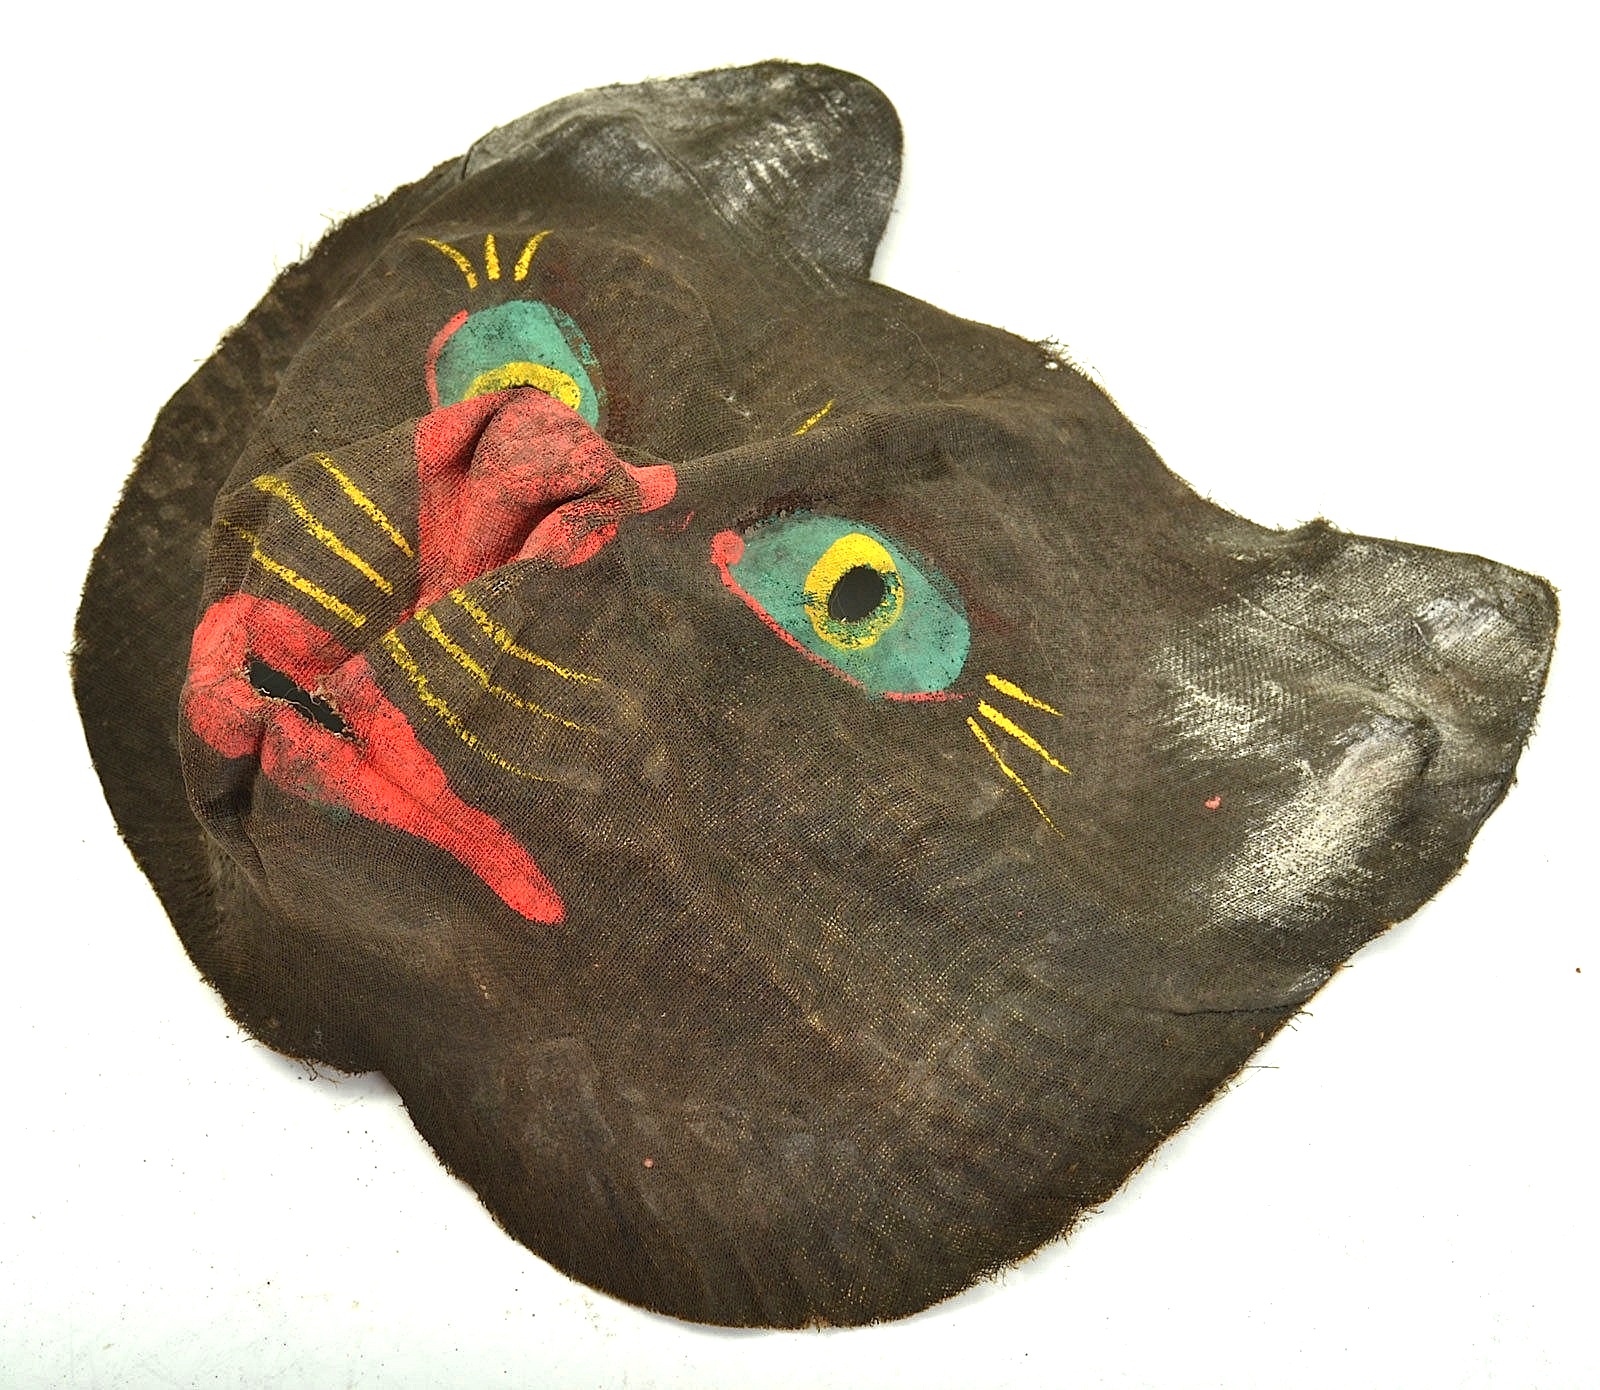 Dull Tool Dim Bulb: Best Cat (mask) on the Internet